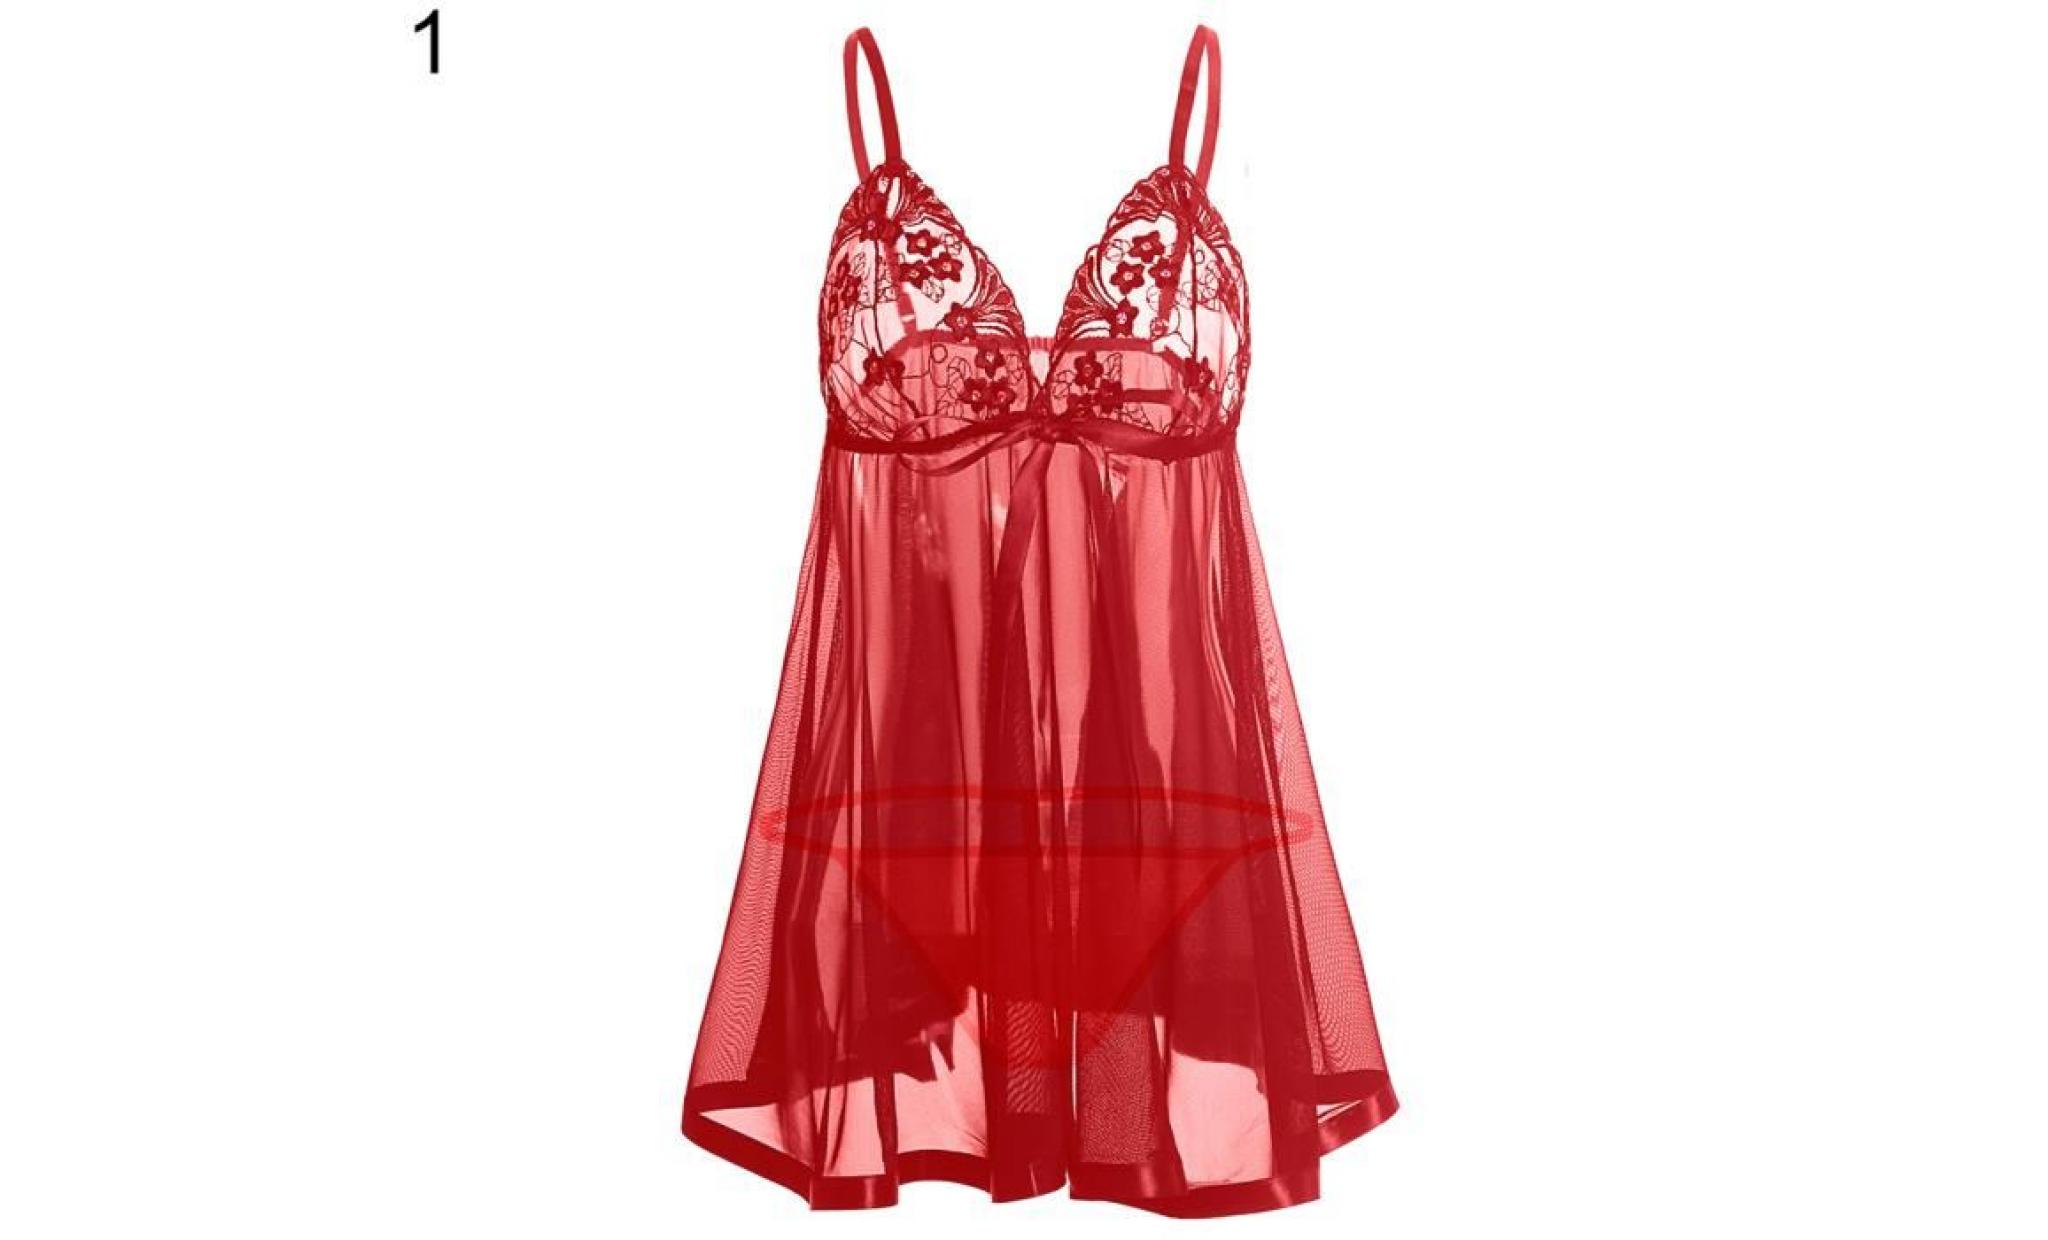 robe en dentelle transparente transparente à bretelles pour femmes throng sleepwear nightwear red l